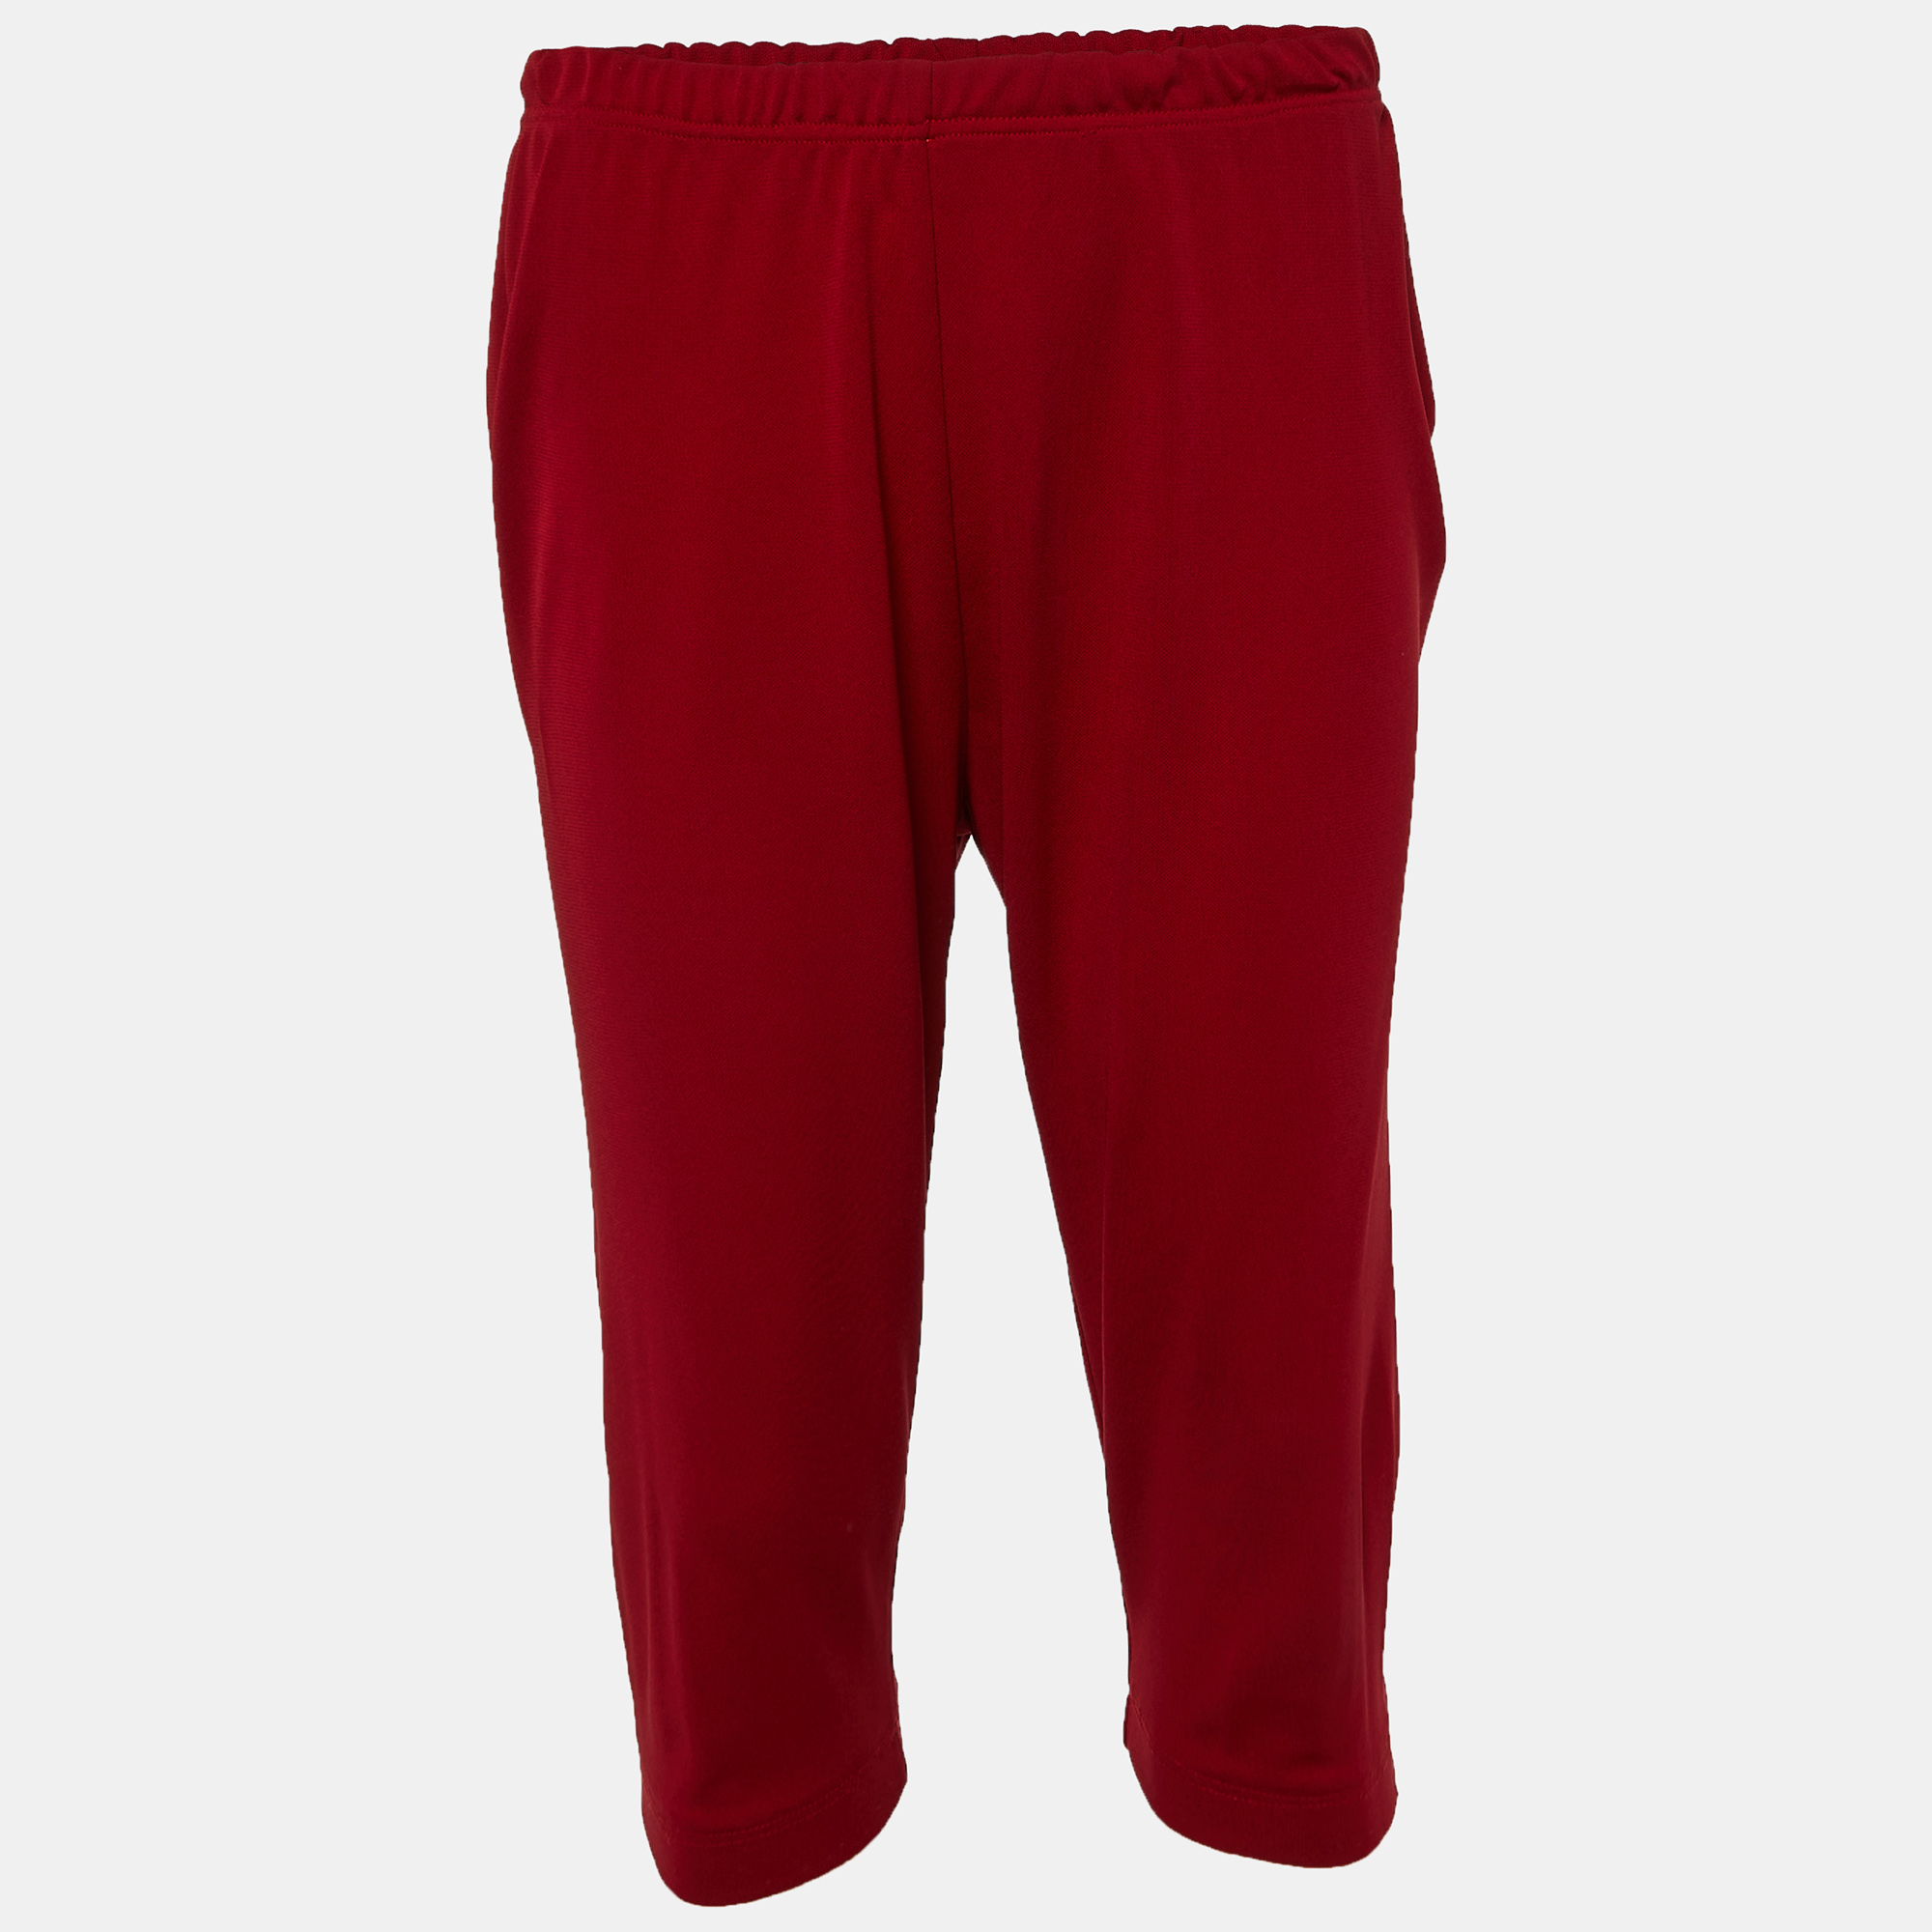 Dolce & gabbana red knit cropped leggings l